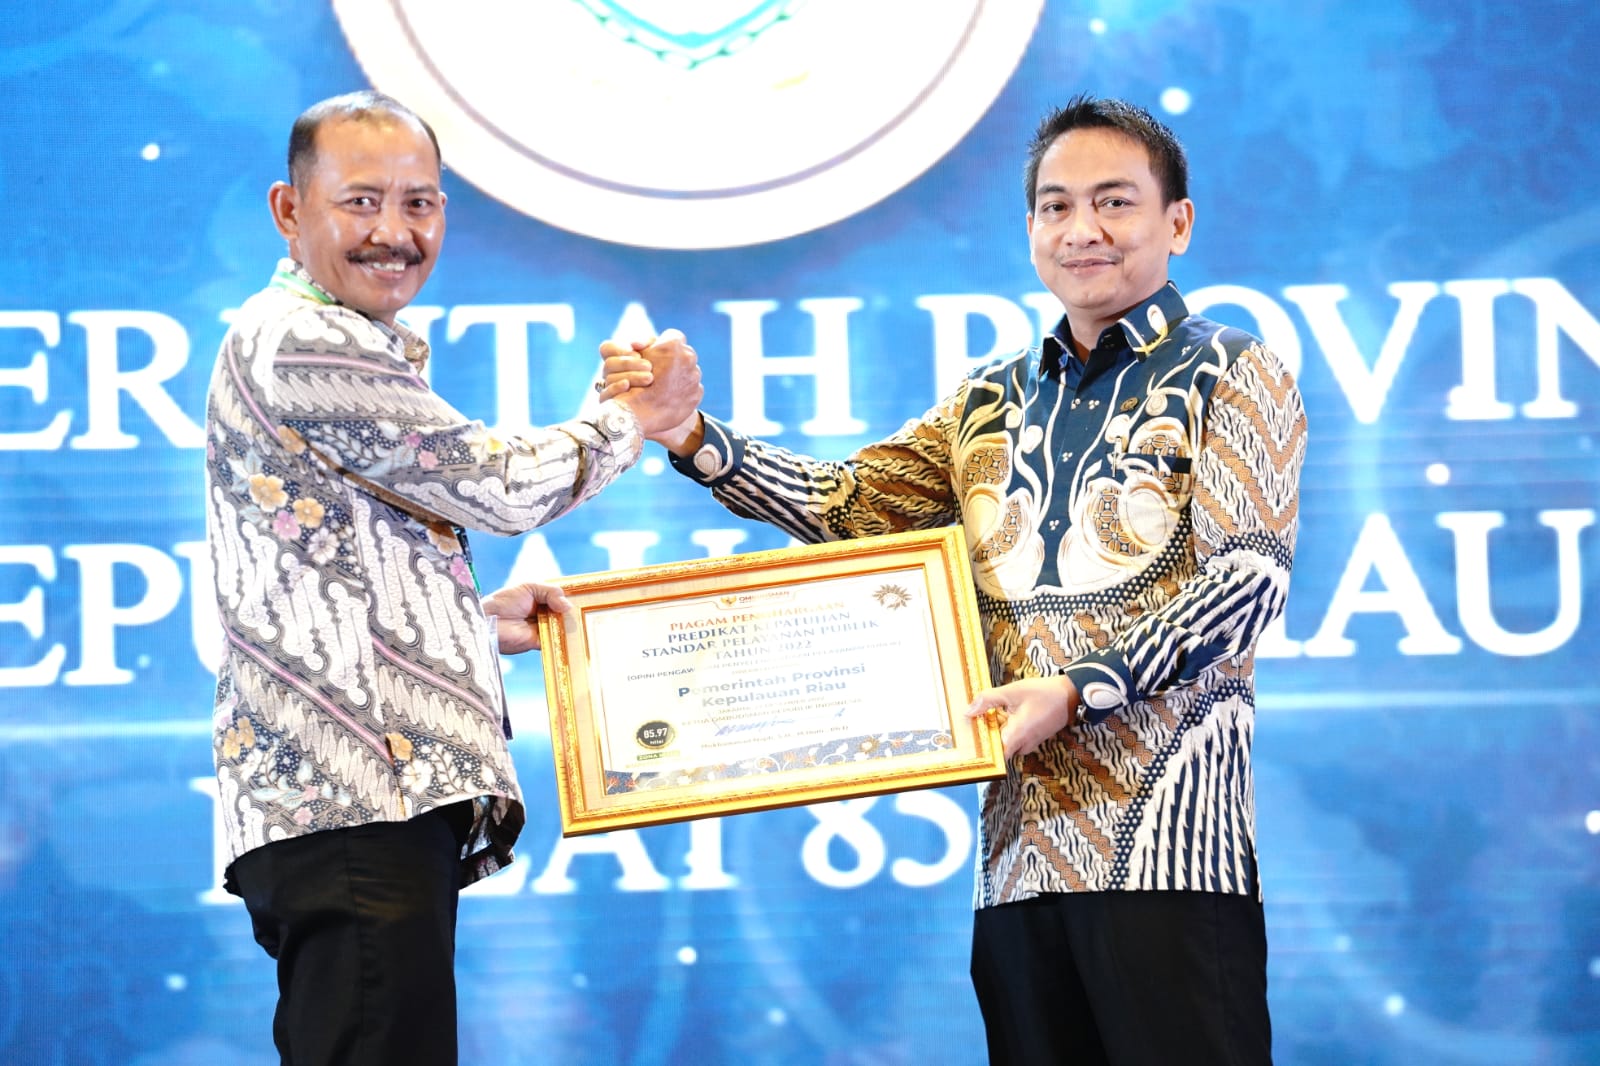 Seketaris Daerah Provinsi Kepri Drs Adi Prihantara saat menerima penghargaan dari Ketua Ombudsman RI Mokhammad Najih, di Hotel Bidakara Jakarta Selatan. Kamis (22/12/22)./f.dok.DKP.